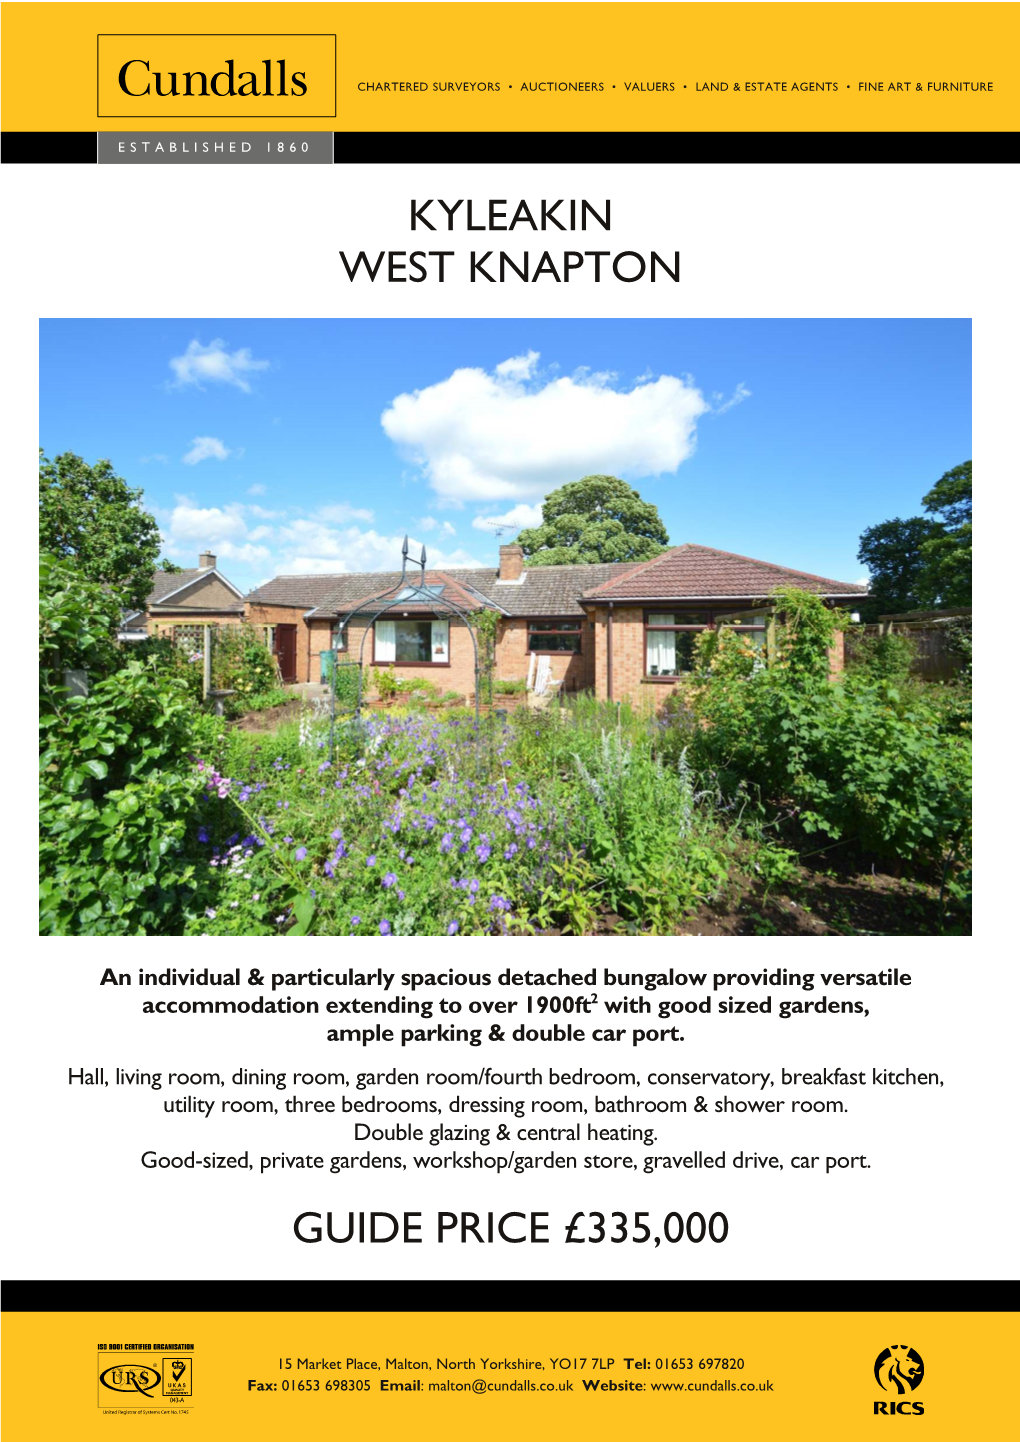 Kyleakin West Knapton Guide Price £335,000